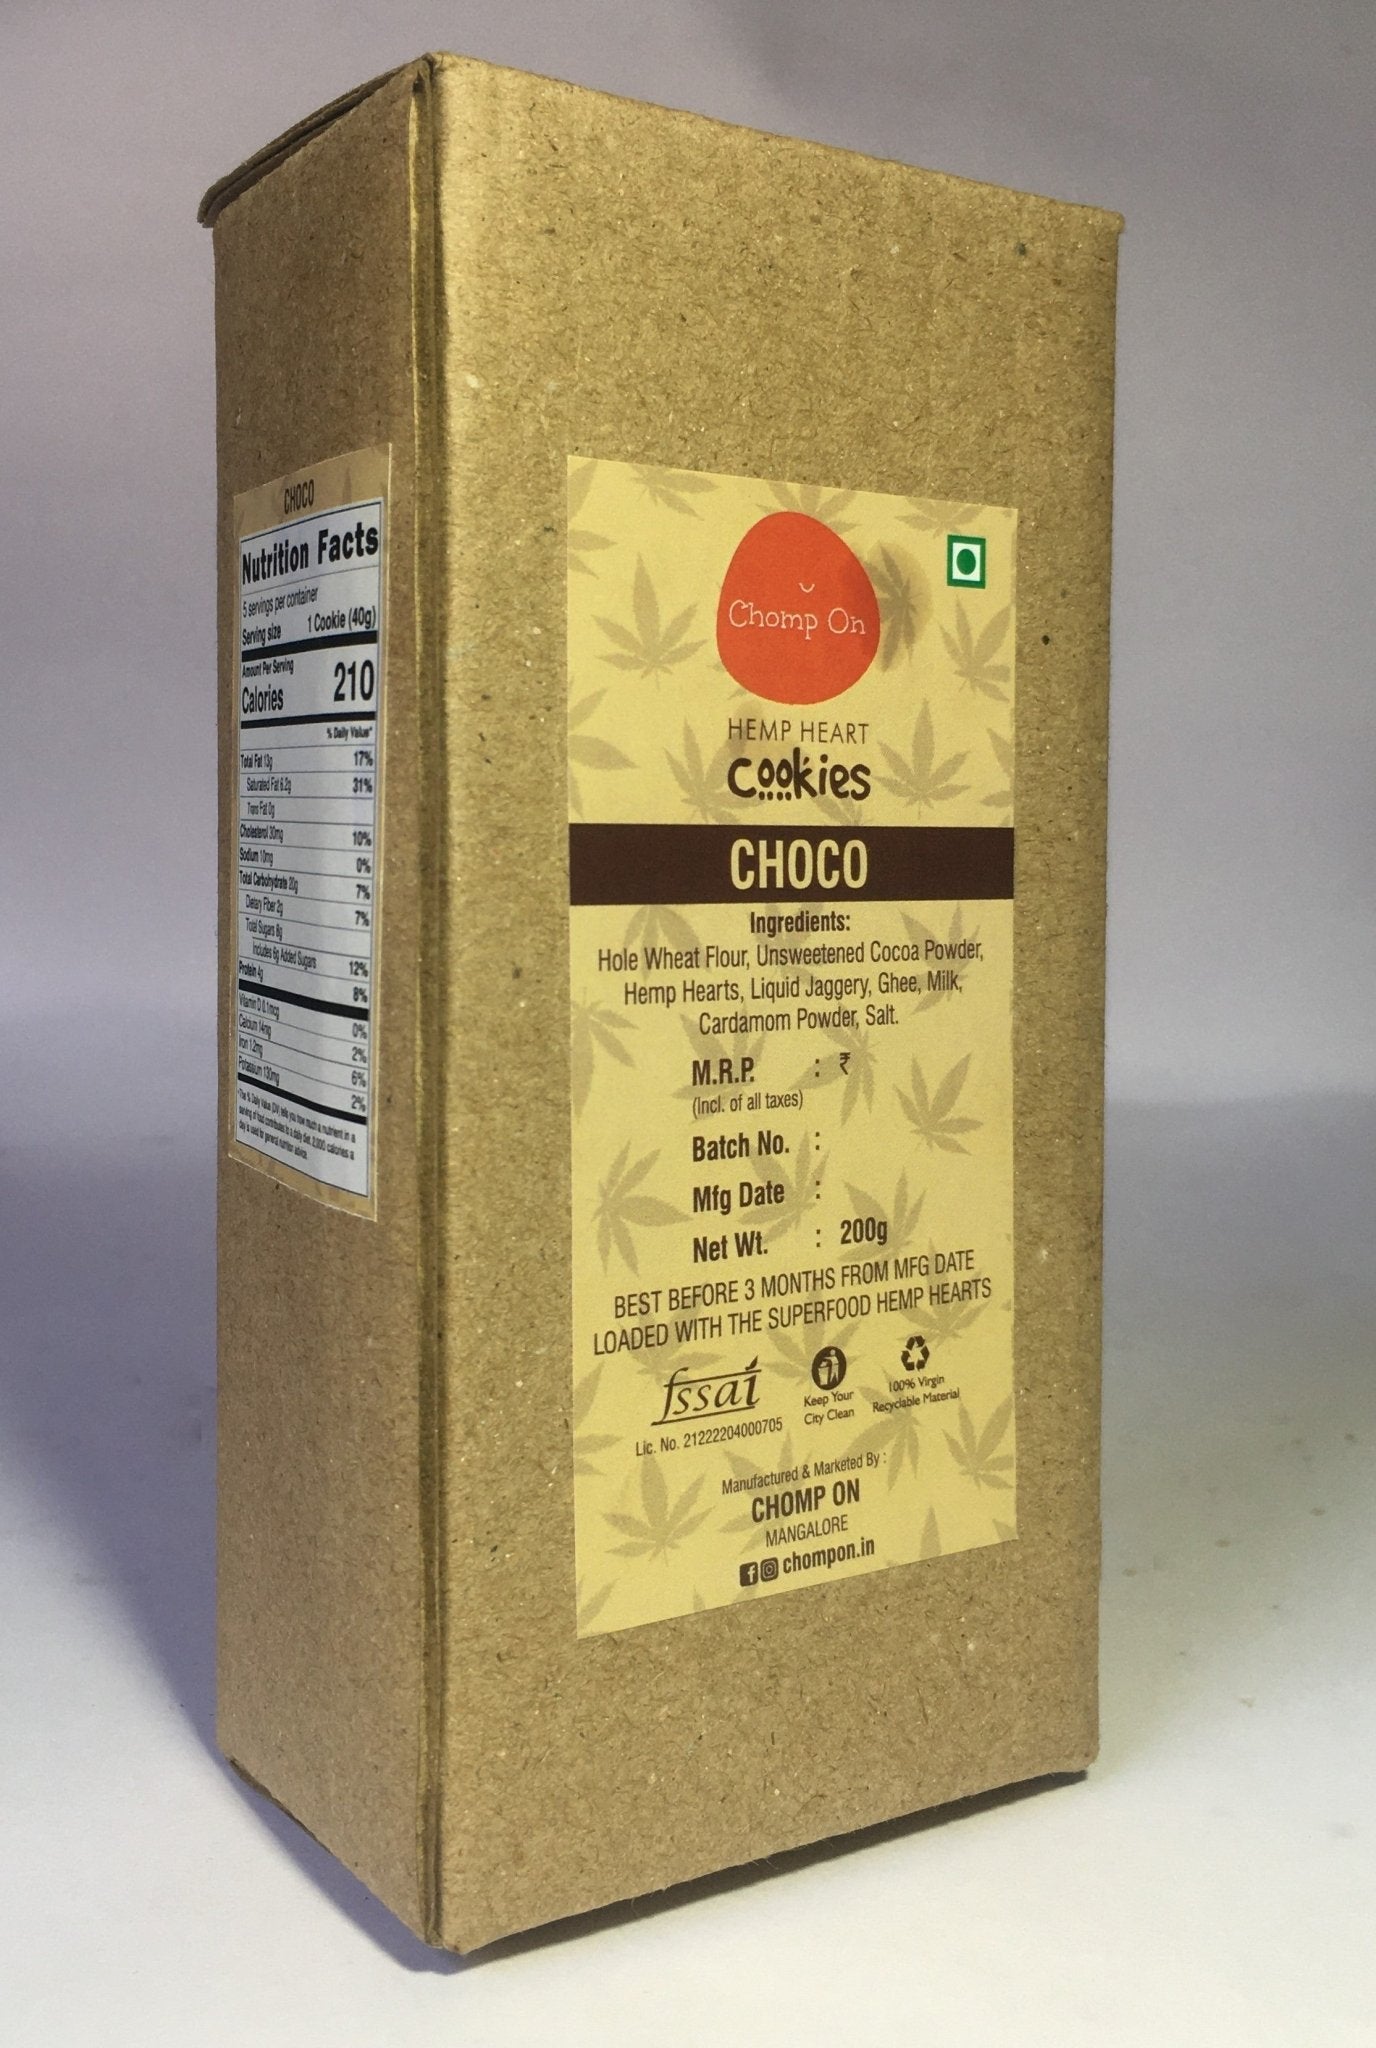 Chomp On Hemp Heart Cookies - Choco - CBD Store India